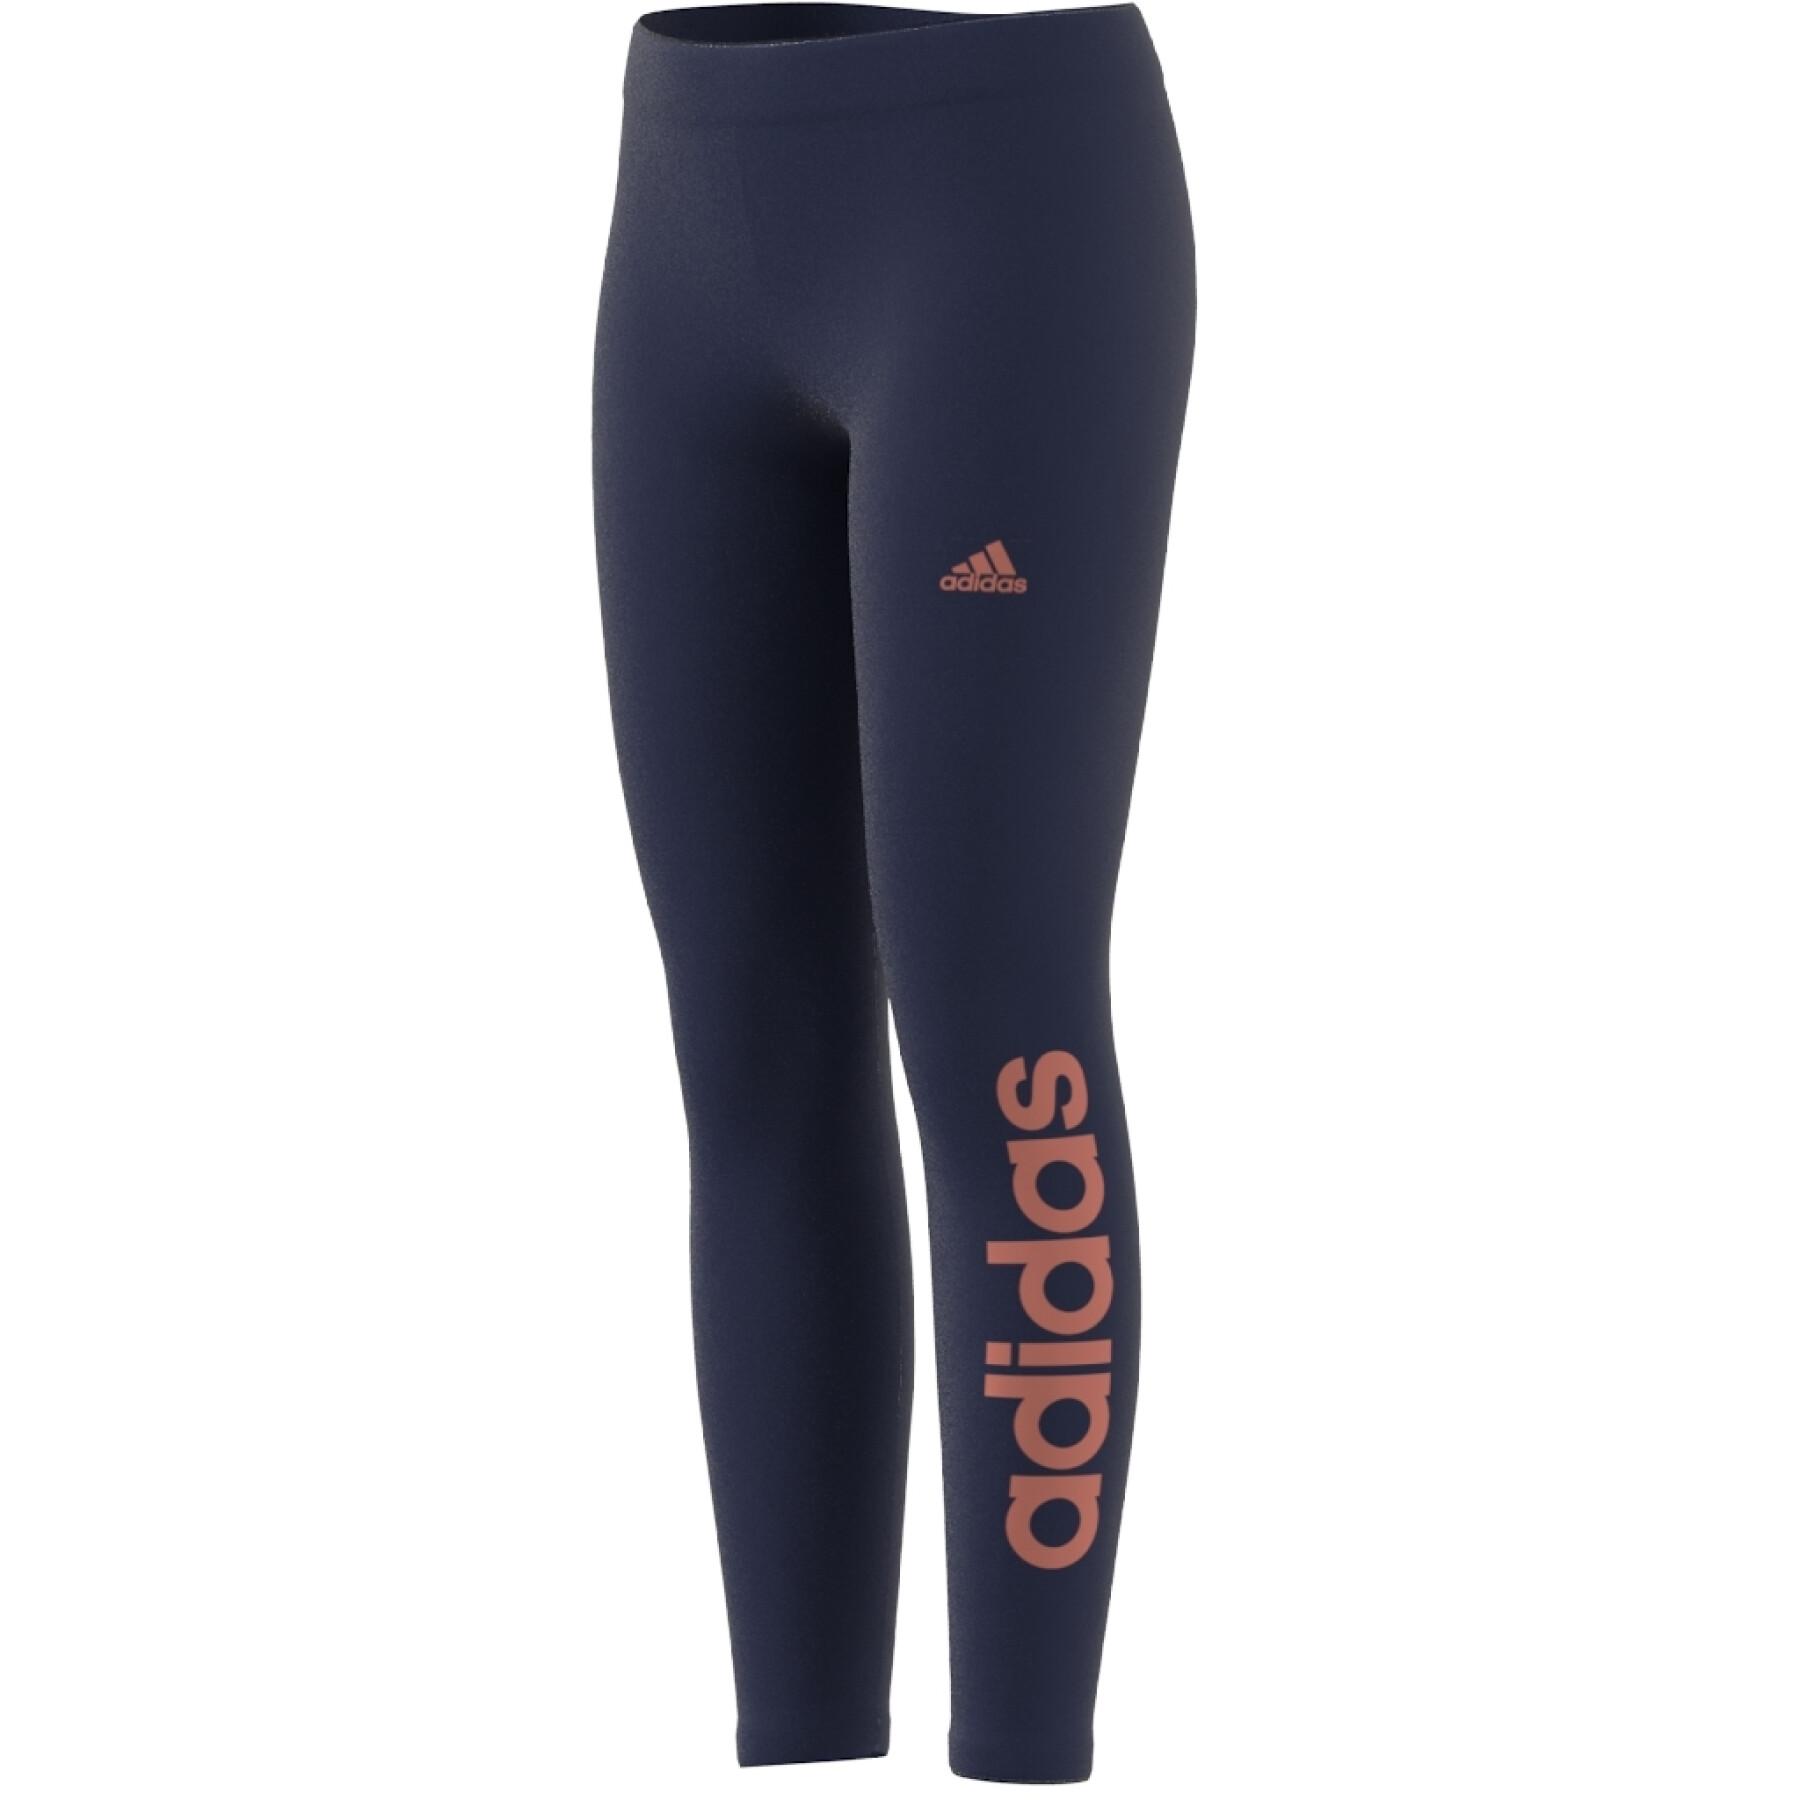 Legging cotton - Logo Textile wear Baselayers Essentials - Handball - Linear girl adidas